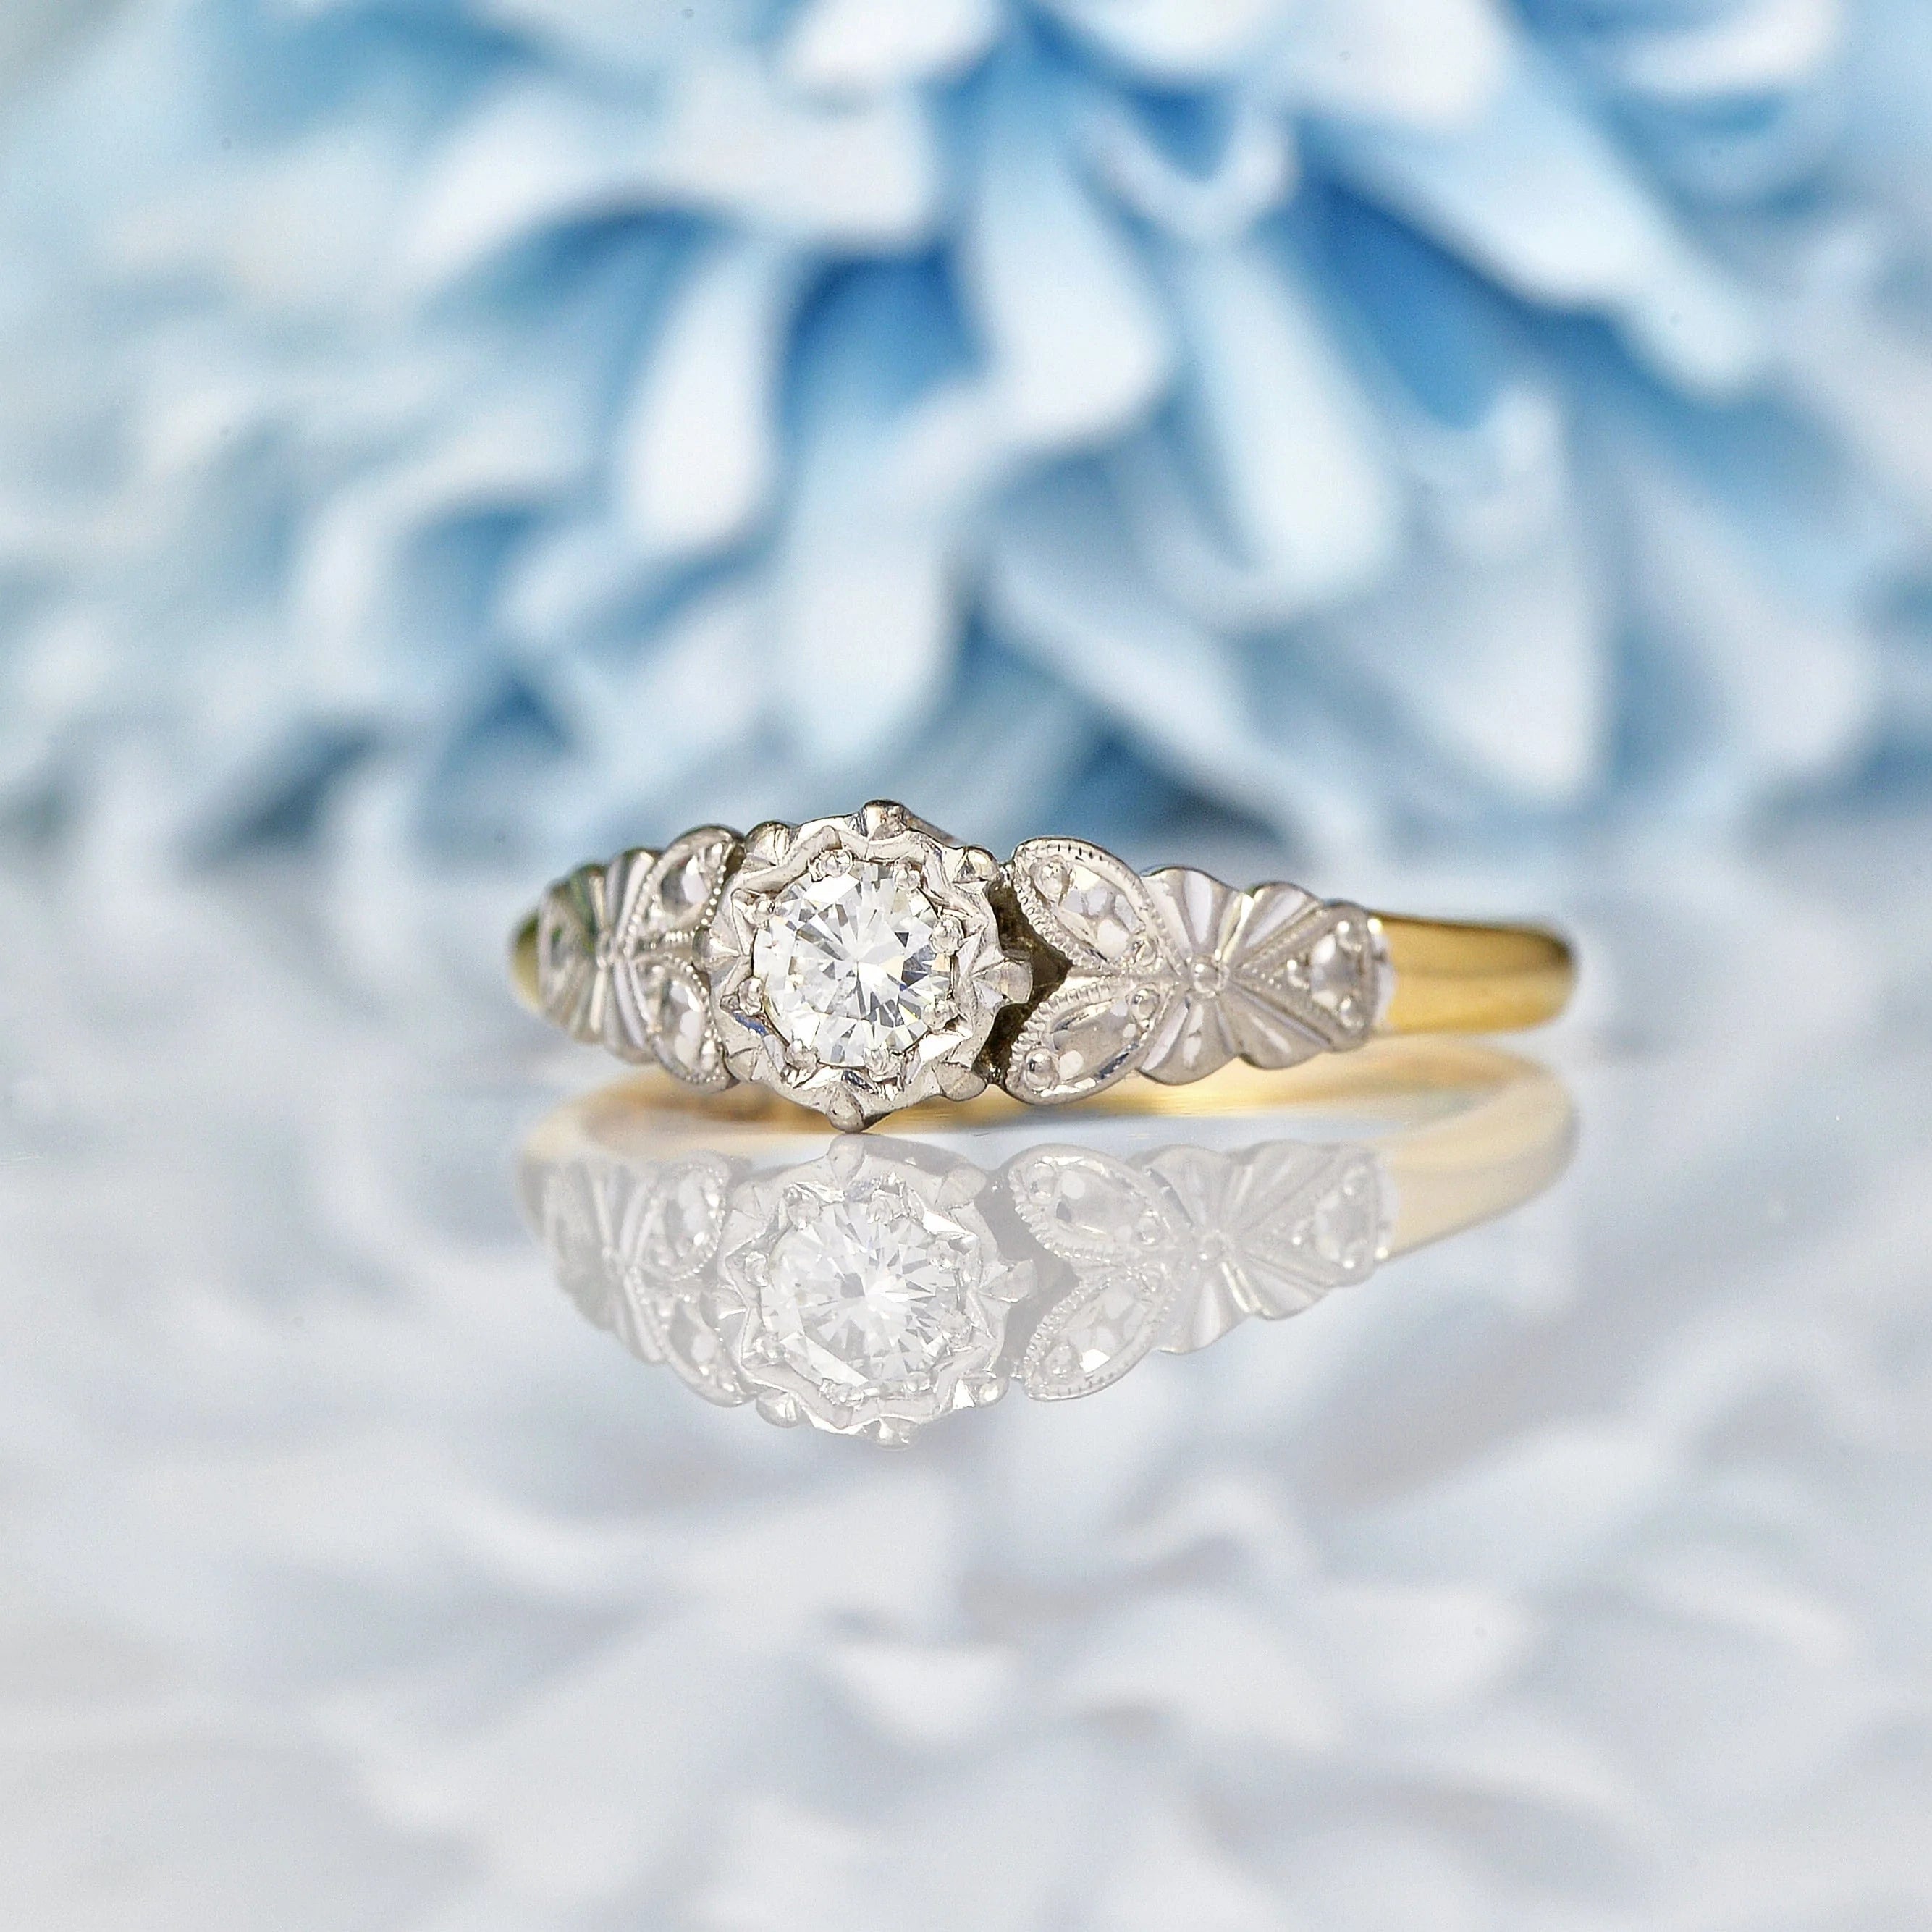 Ellibelle Jewellery Art Deco Diamond Engagement Ring (0.20ct)